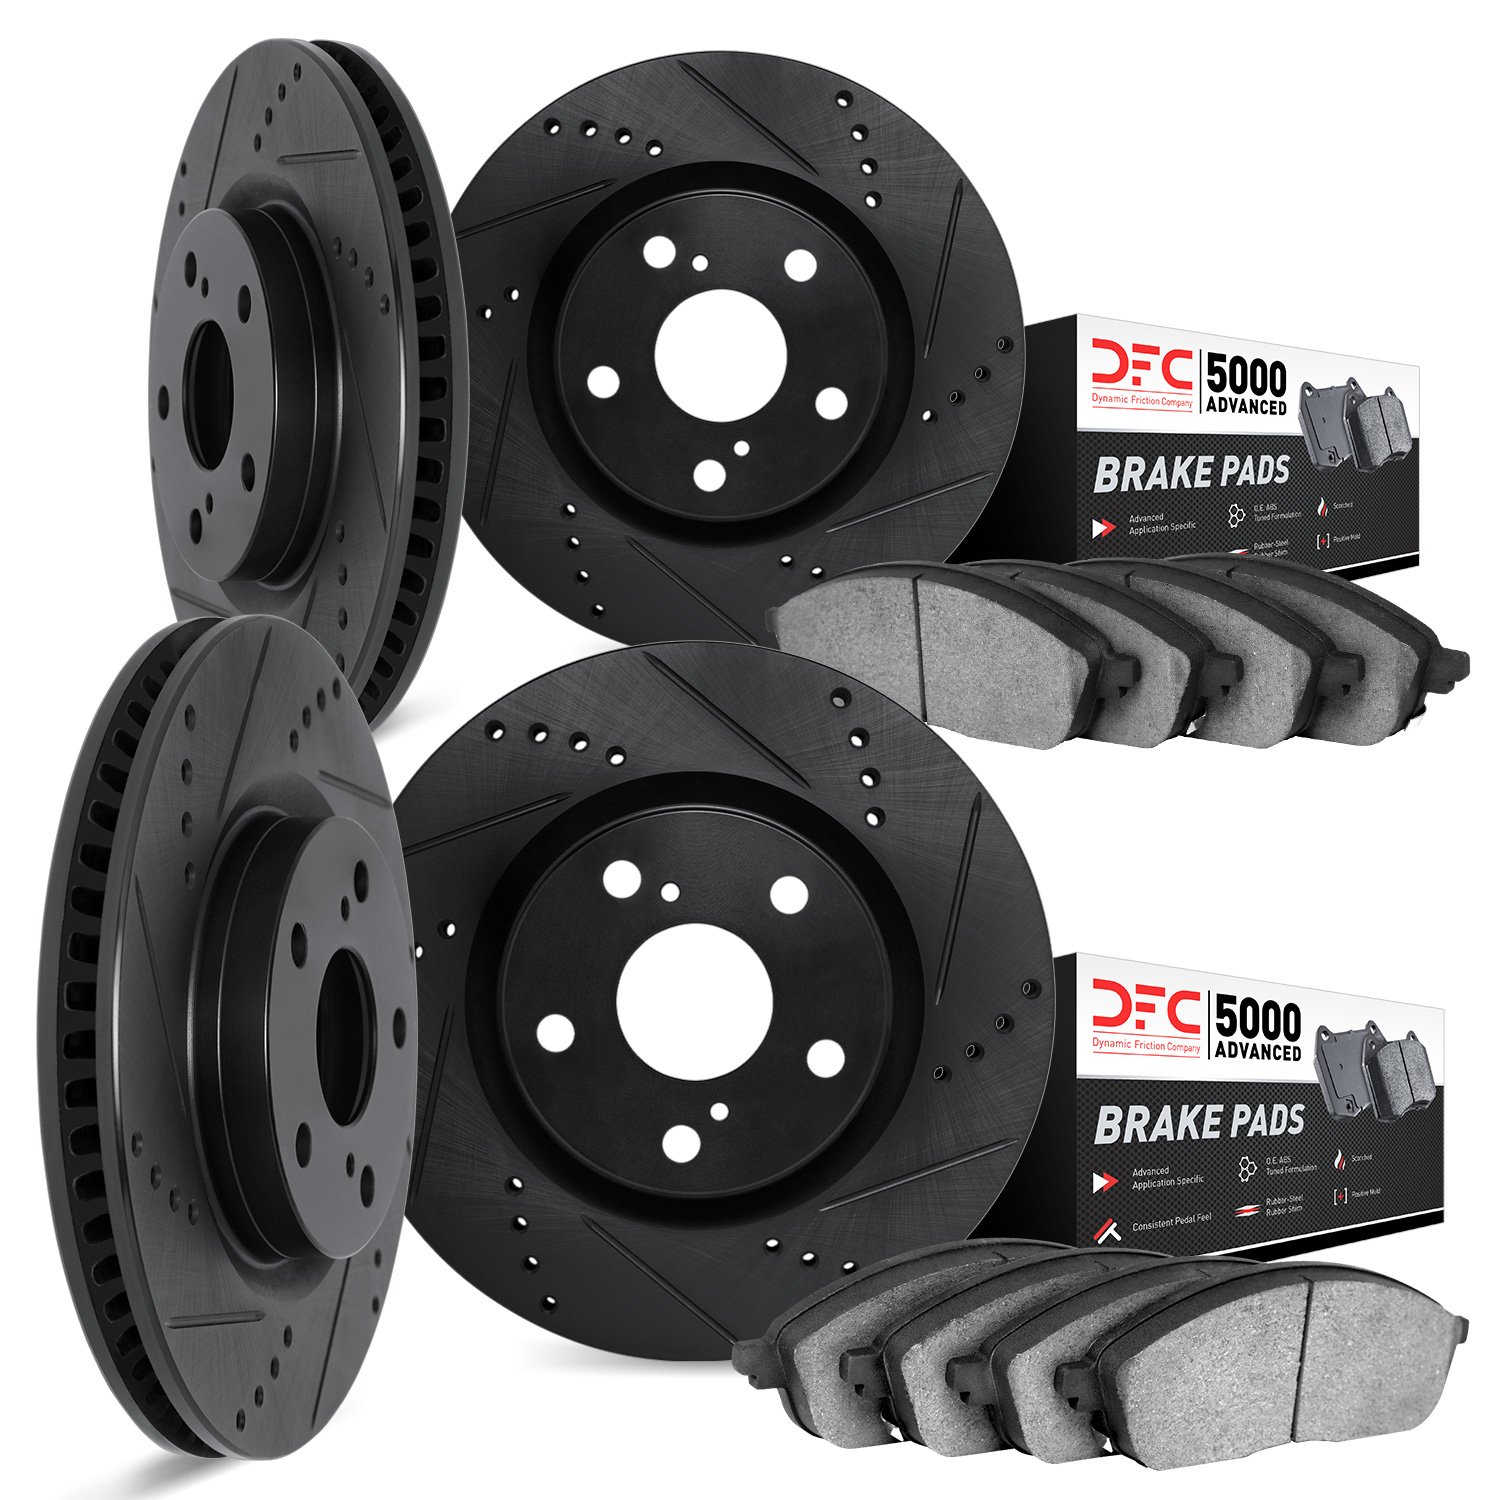 8504-03075 Drilled/Slotted Brake Rotors w/5000 Advanced Brake Pads Kit [Black], Fits Select Kia/Hyundai/Genesis, Position: Front